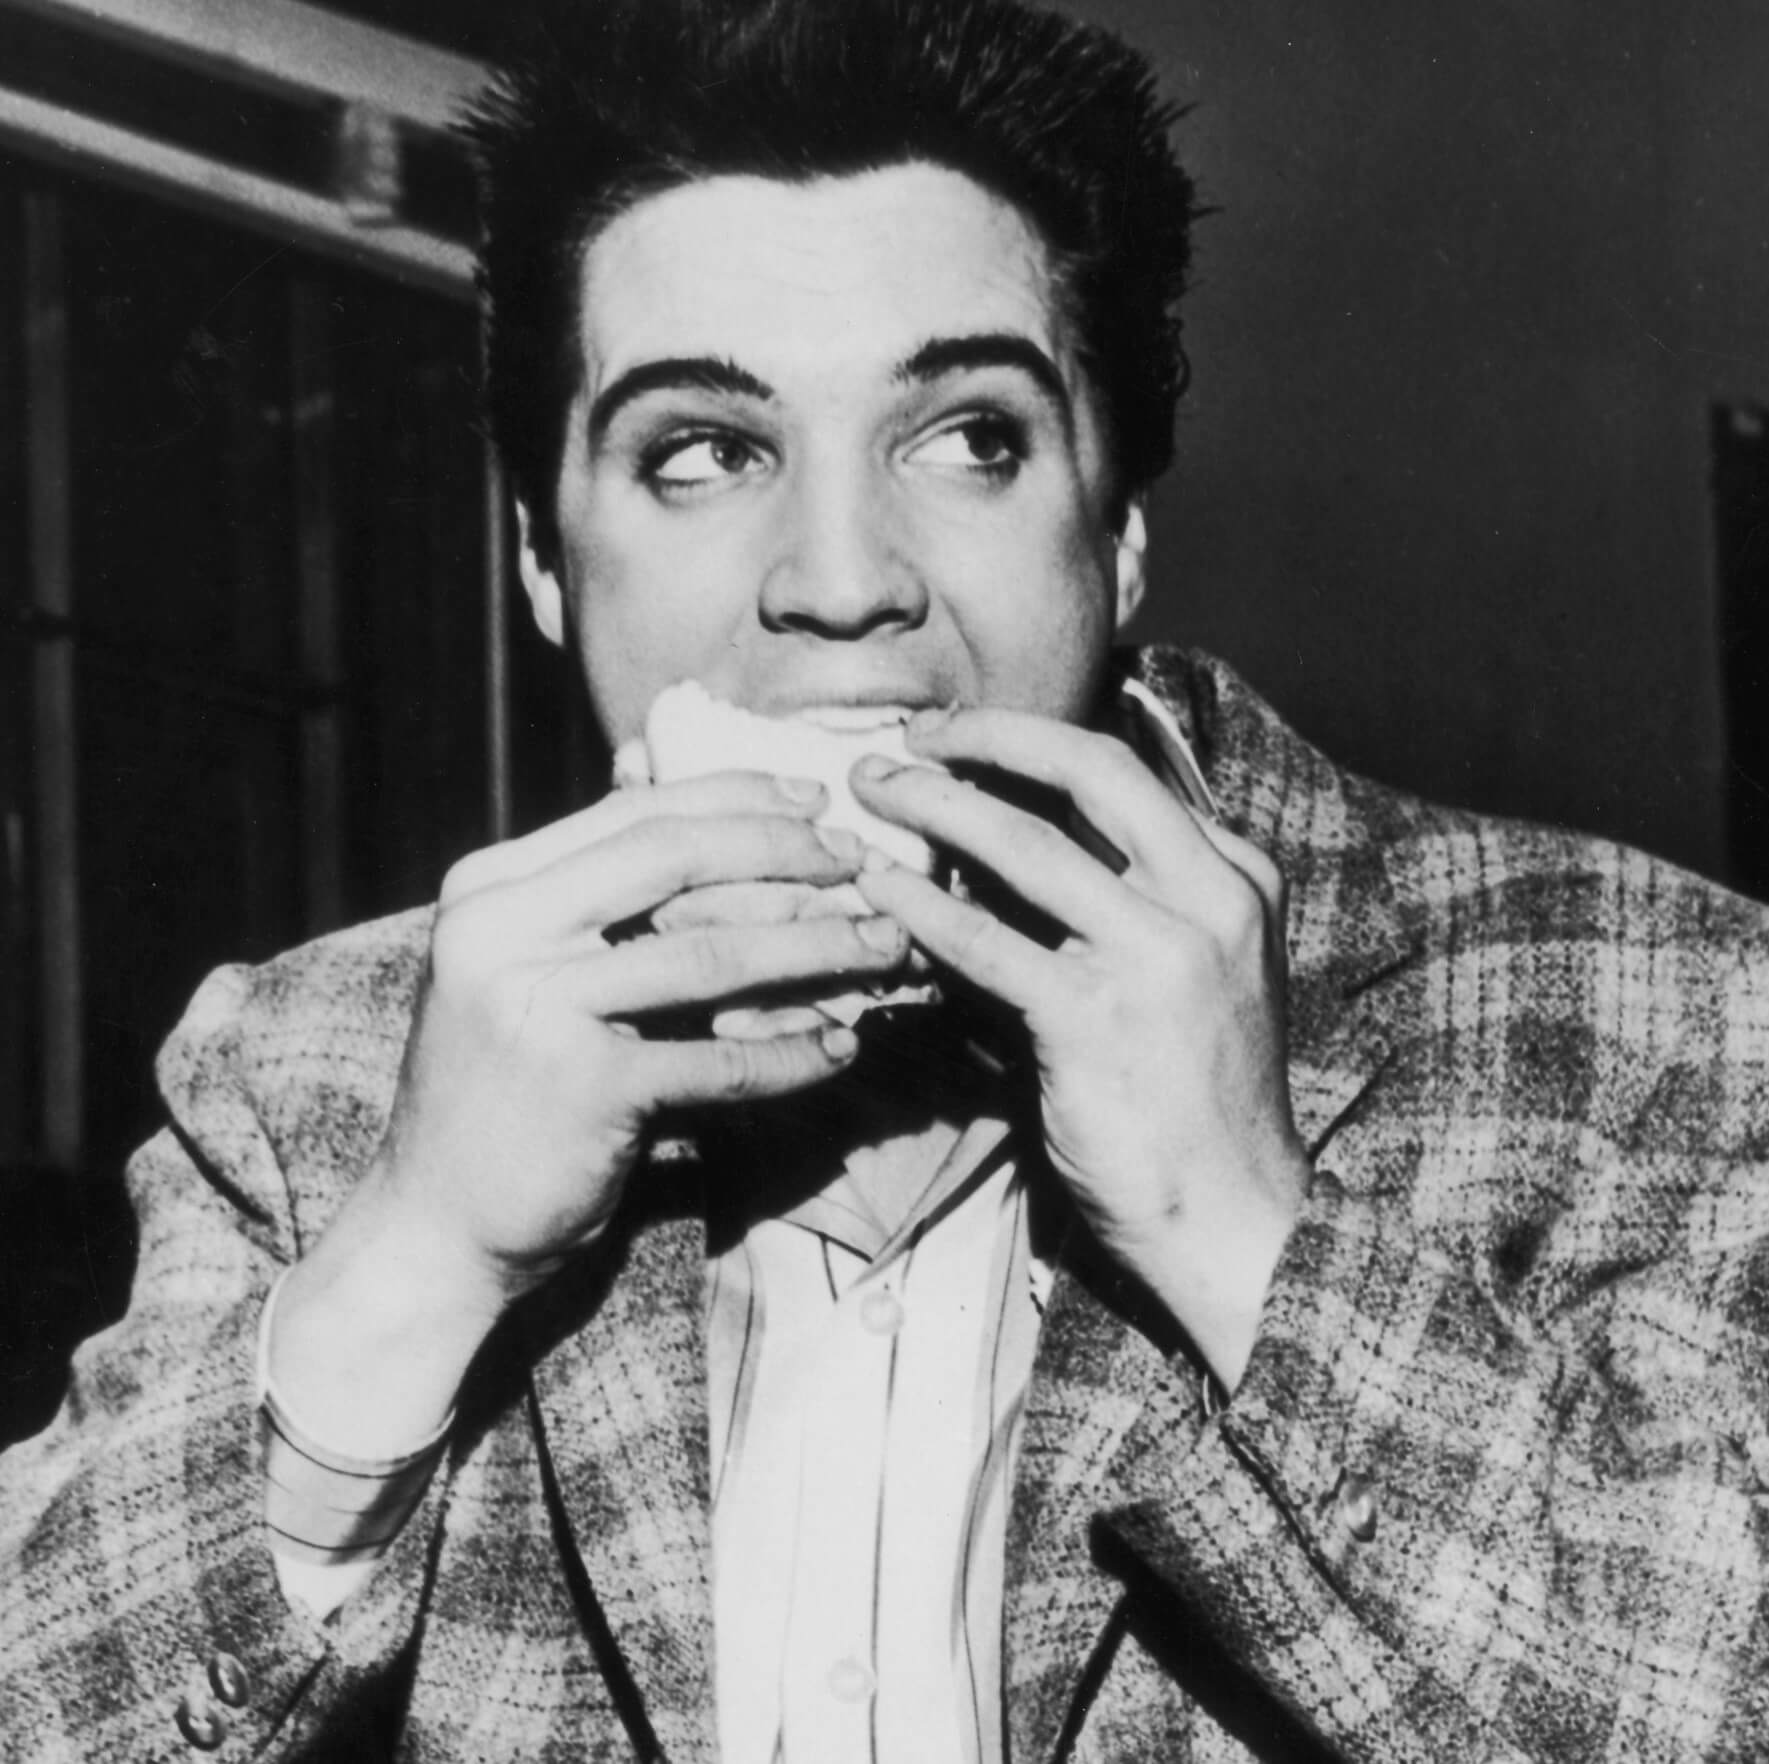 Elvis Presley eating a sandwich